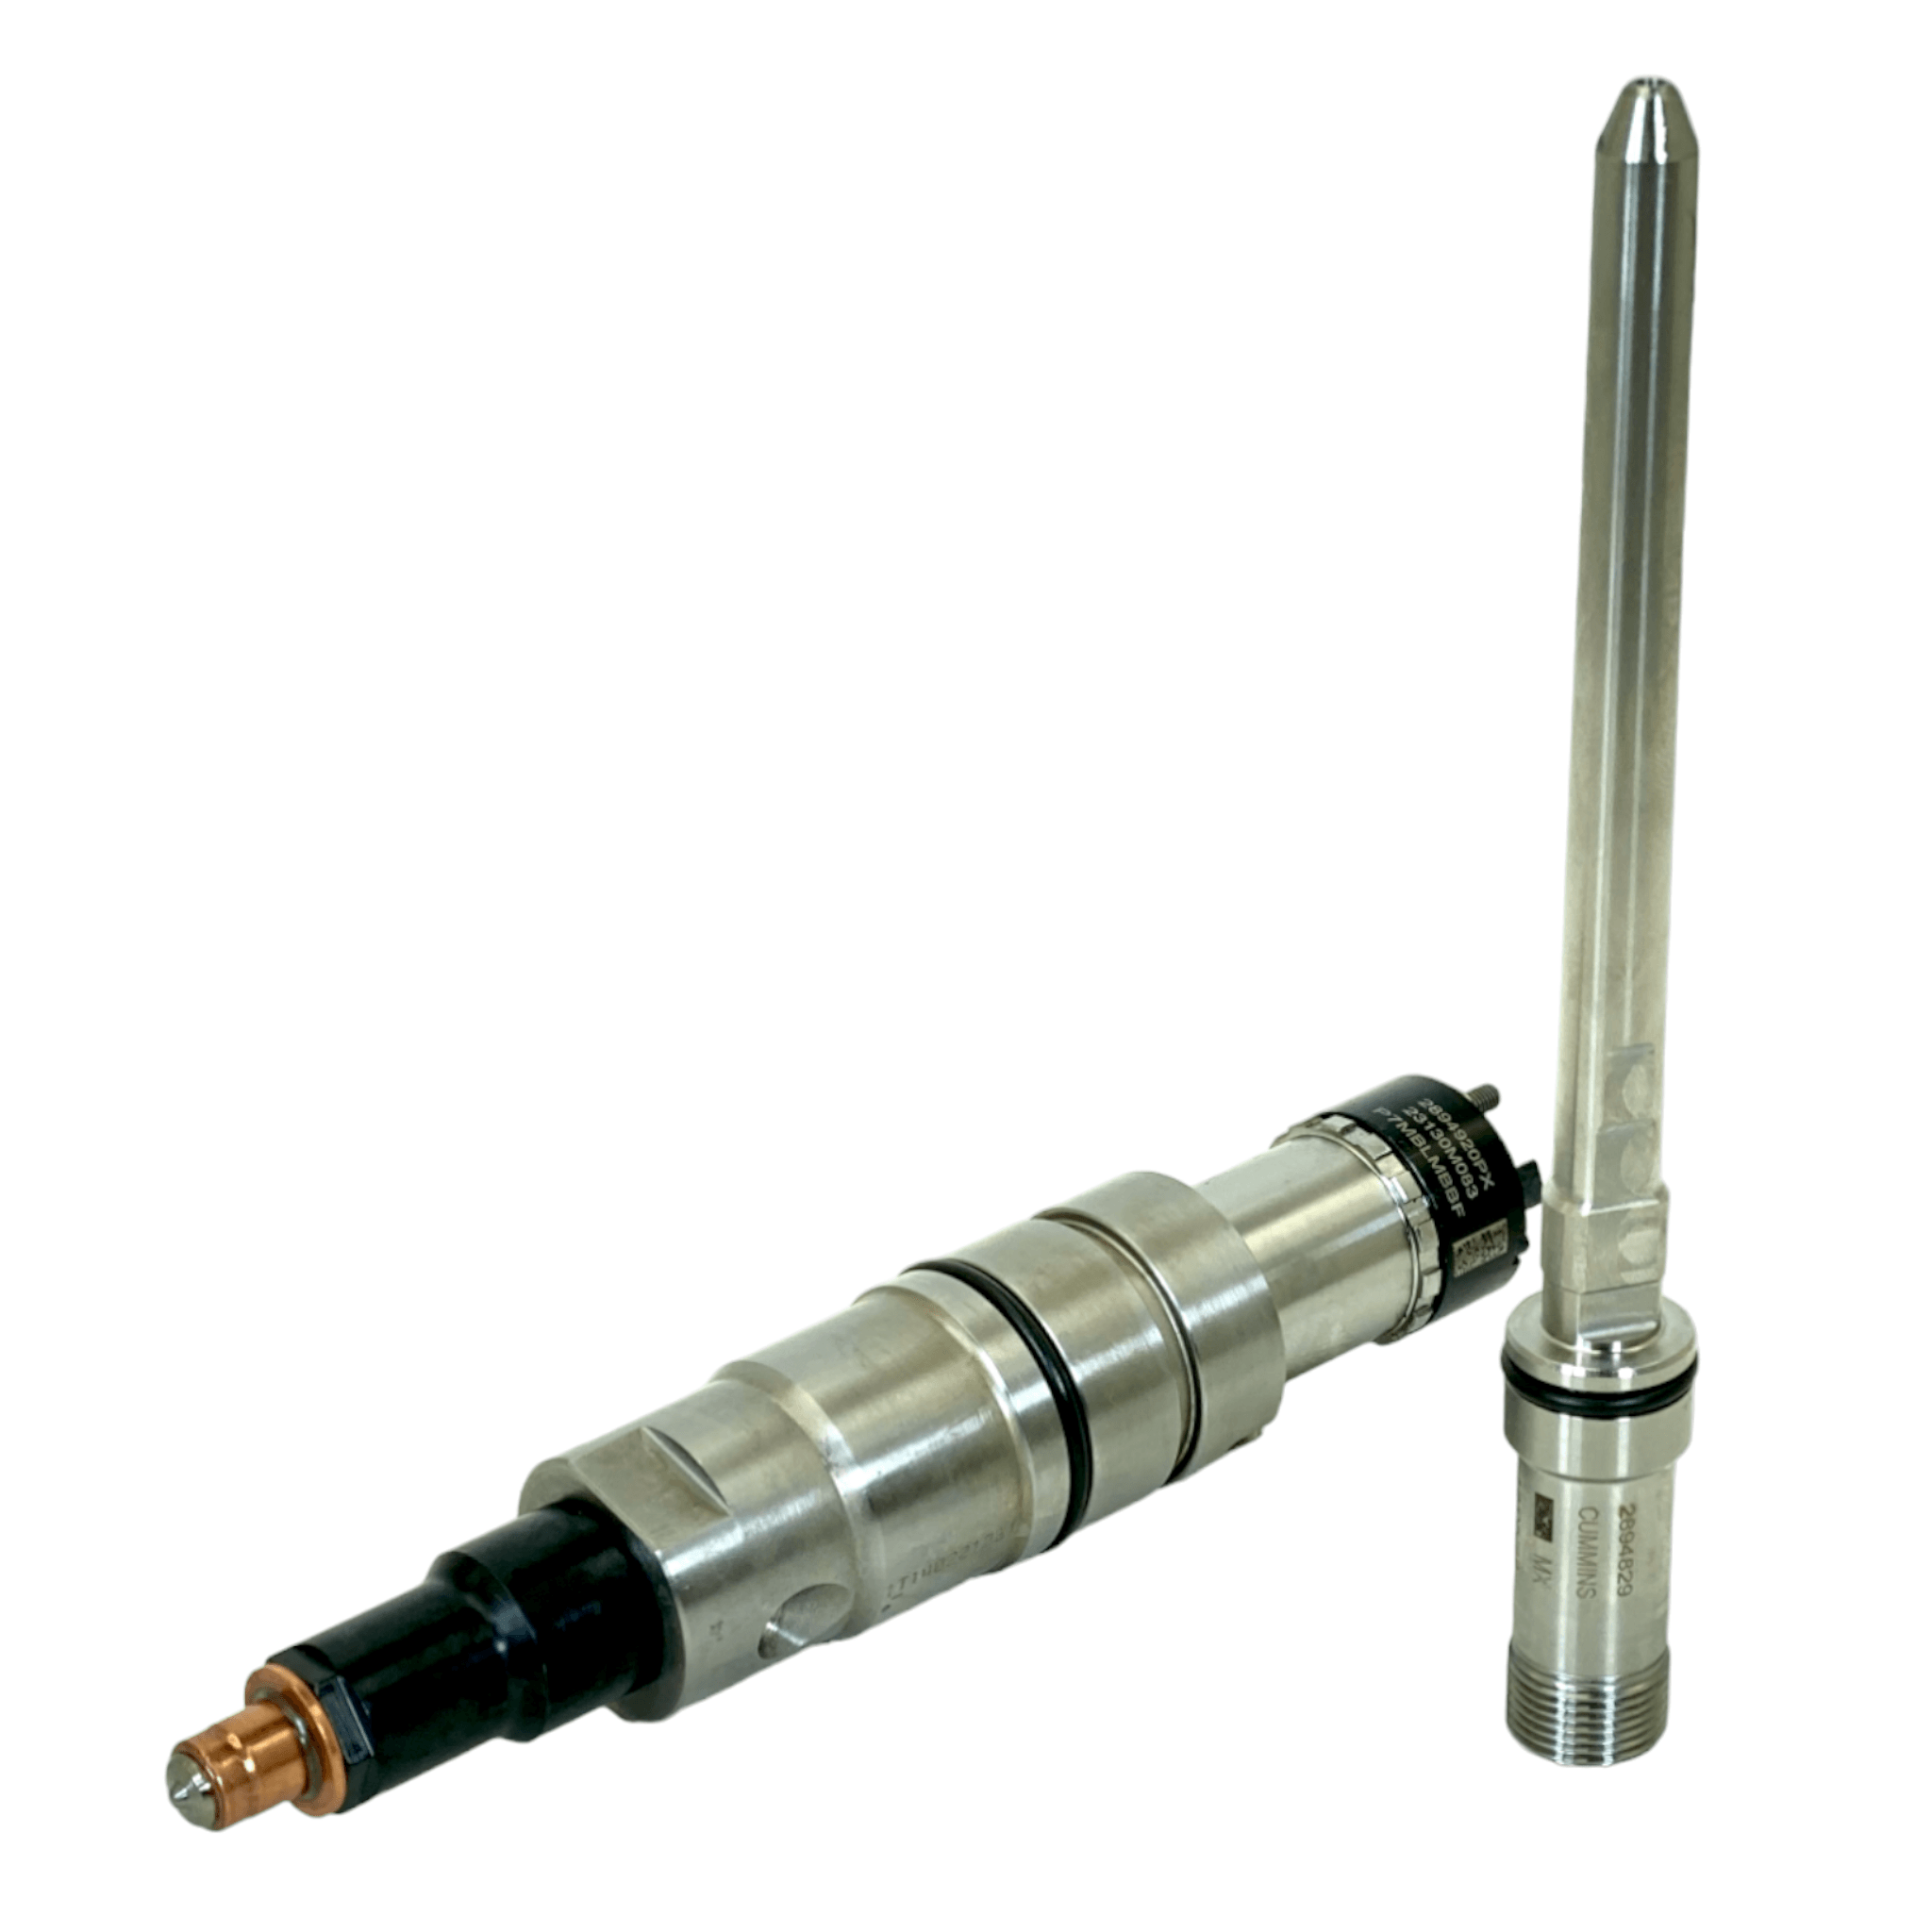 5579415 Oem Cummins Fuel Injector For Xpi Fuel Systems On Epa10 Automotive 15L Isx/Qsx - ADVANCED TRUCK PARTS